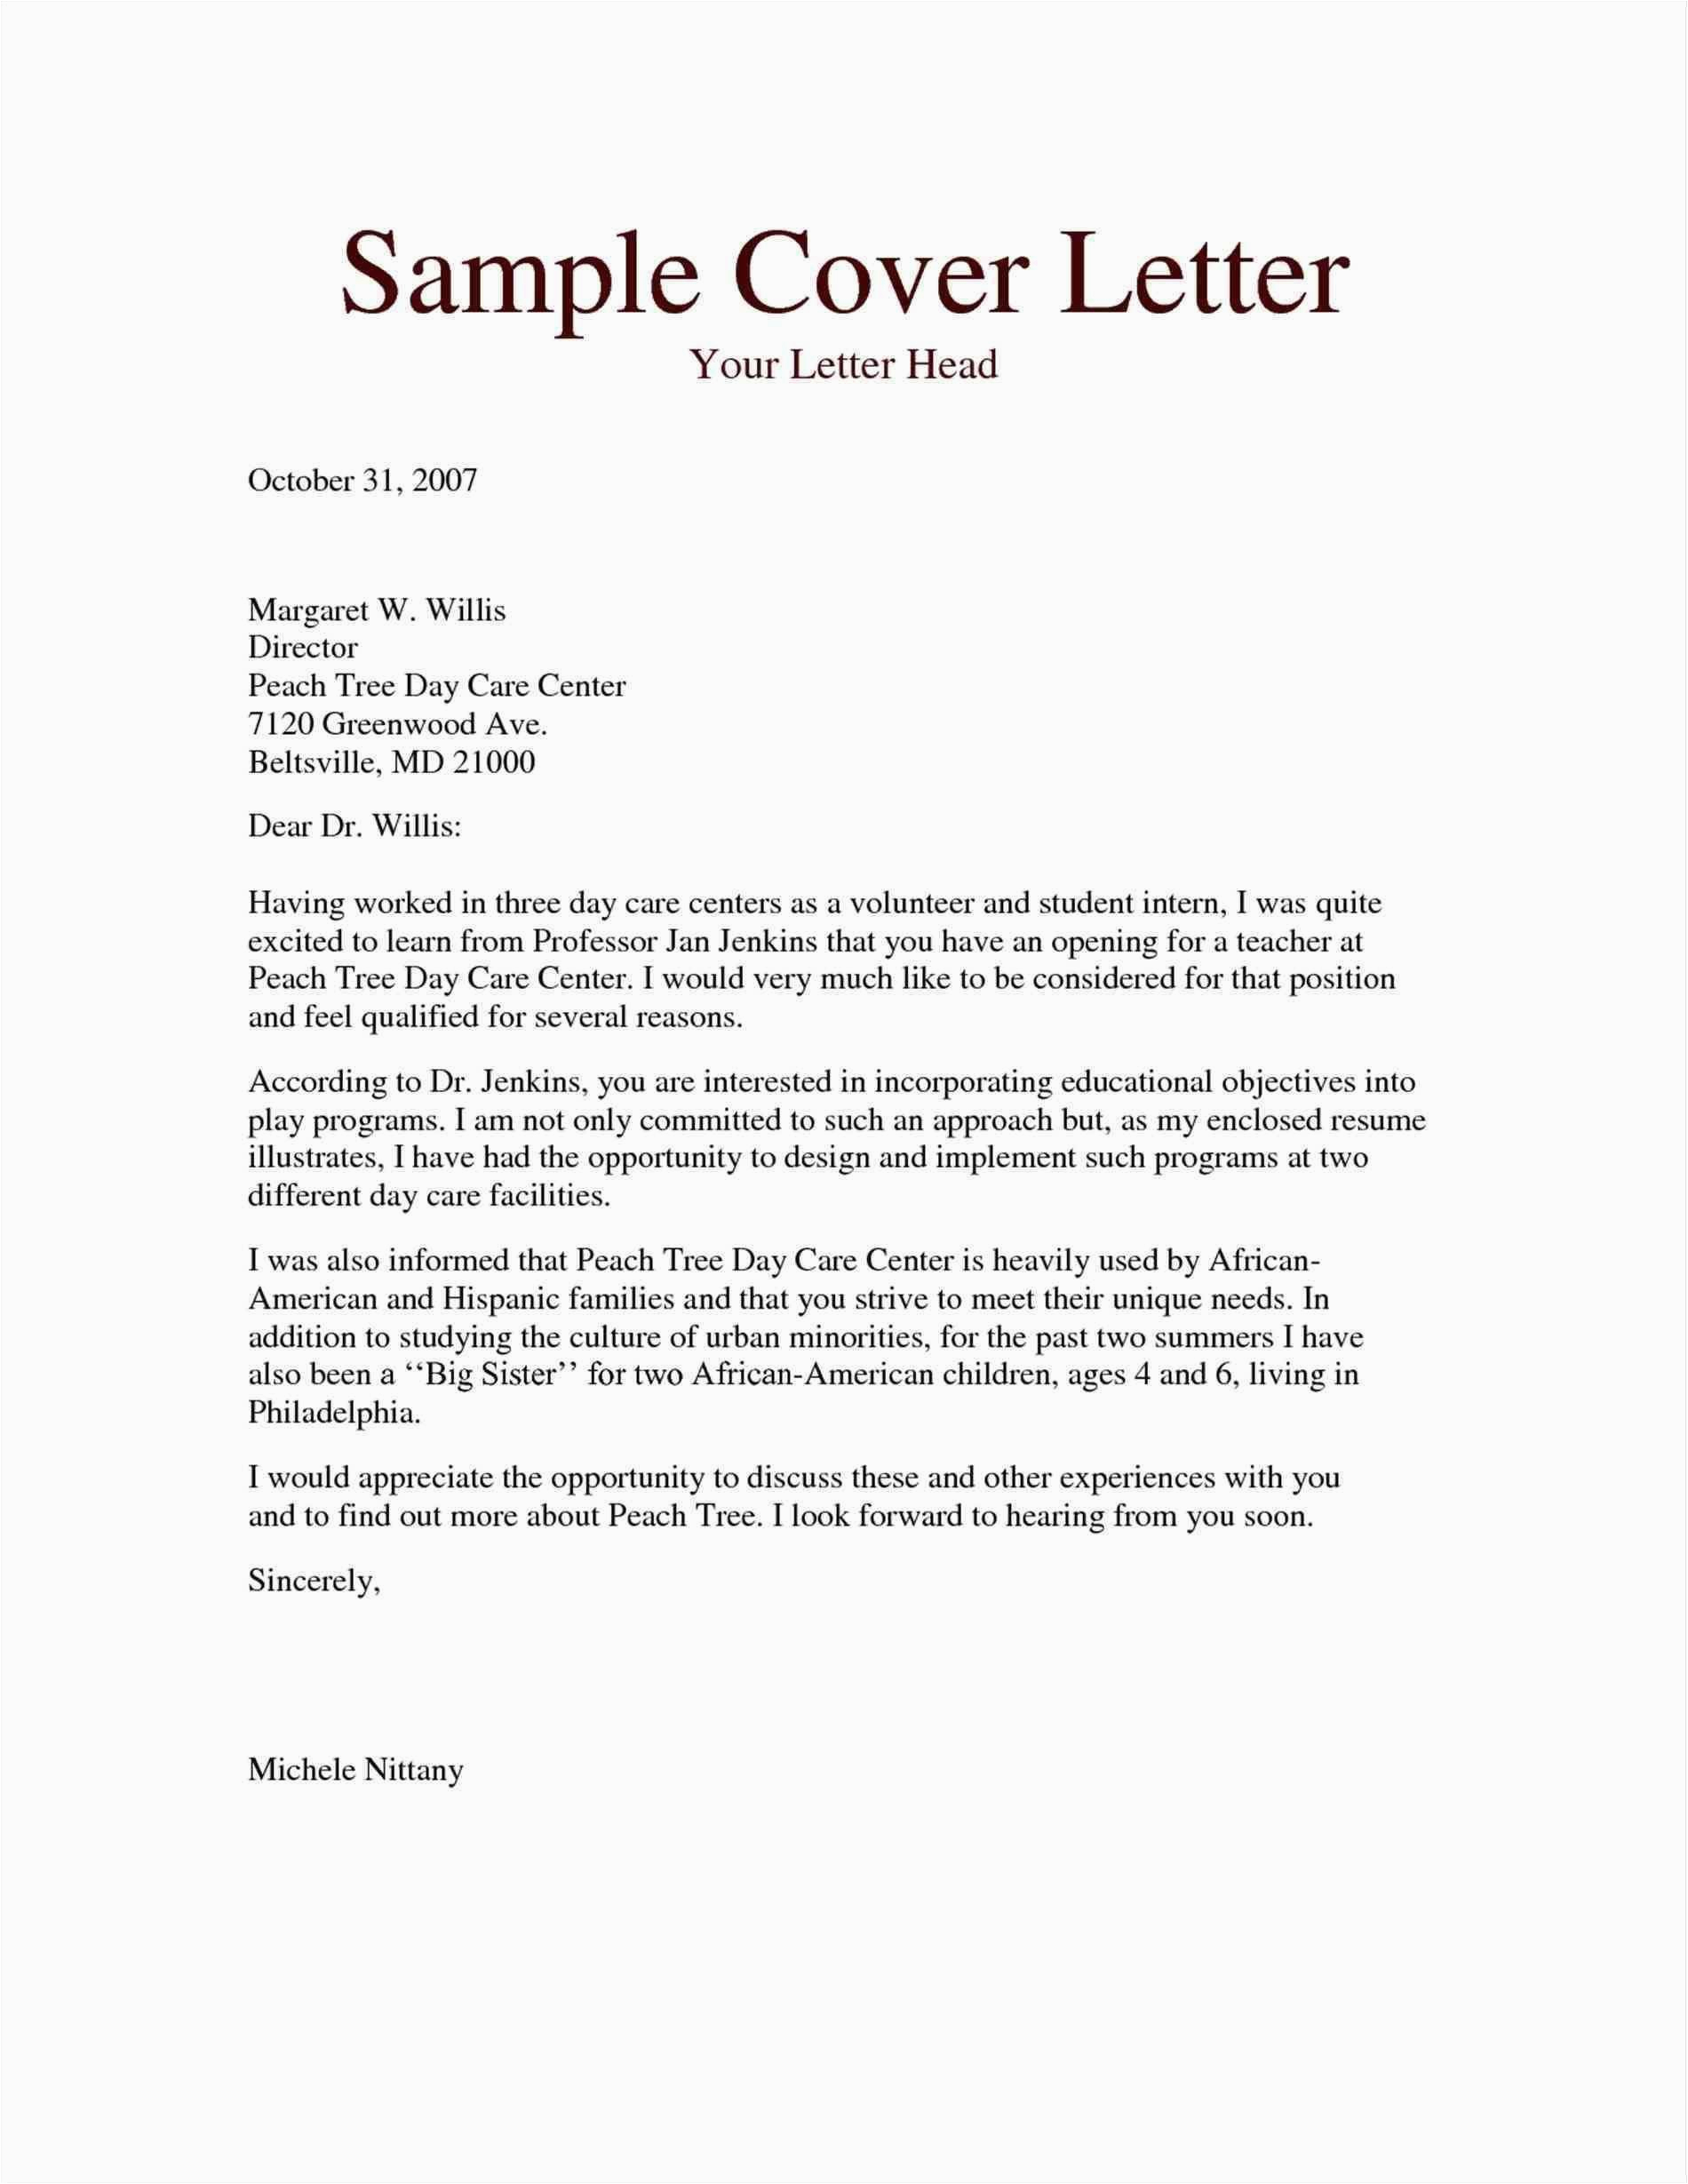 Sample Resume Cover Letter for First Job 25 Free Cover Letter Samples